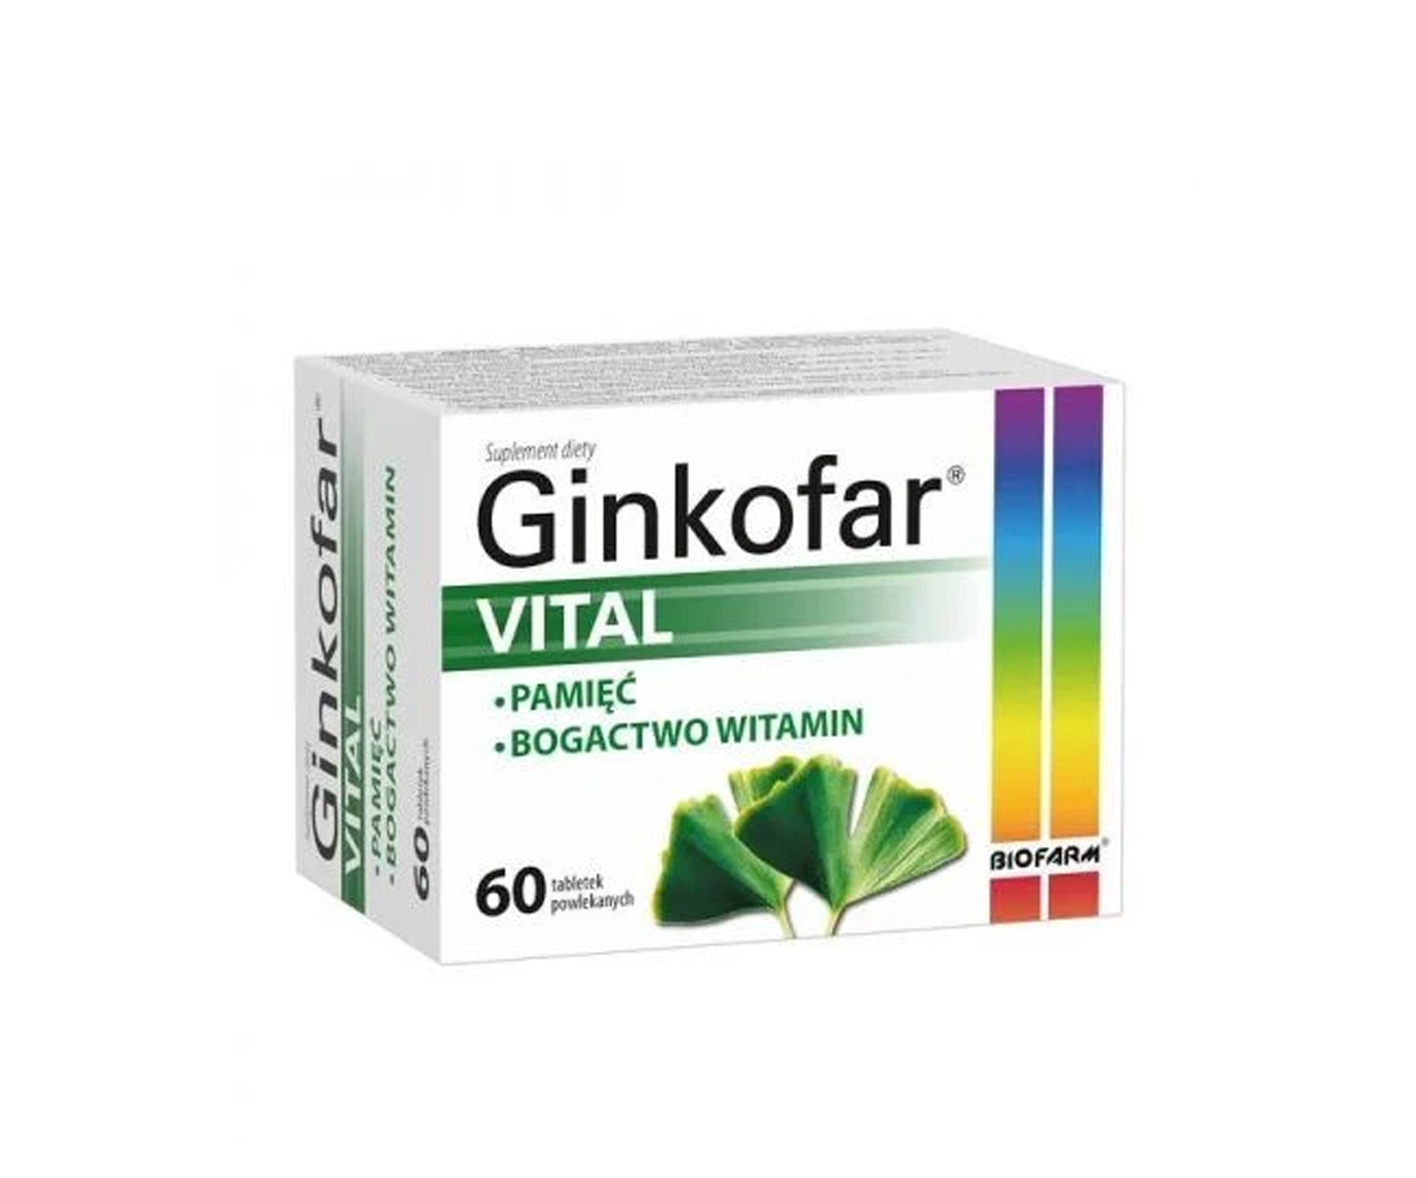 Ginkofar Vital, concentration tablets